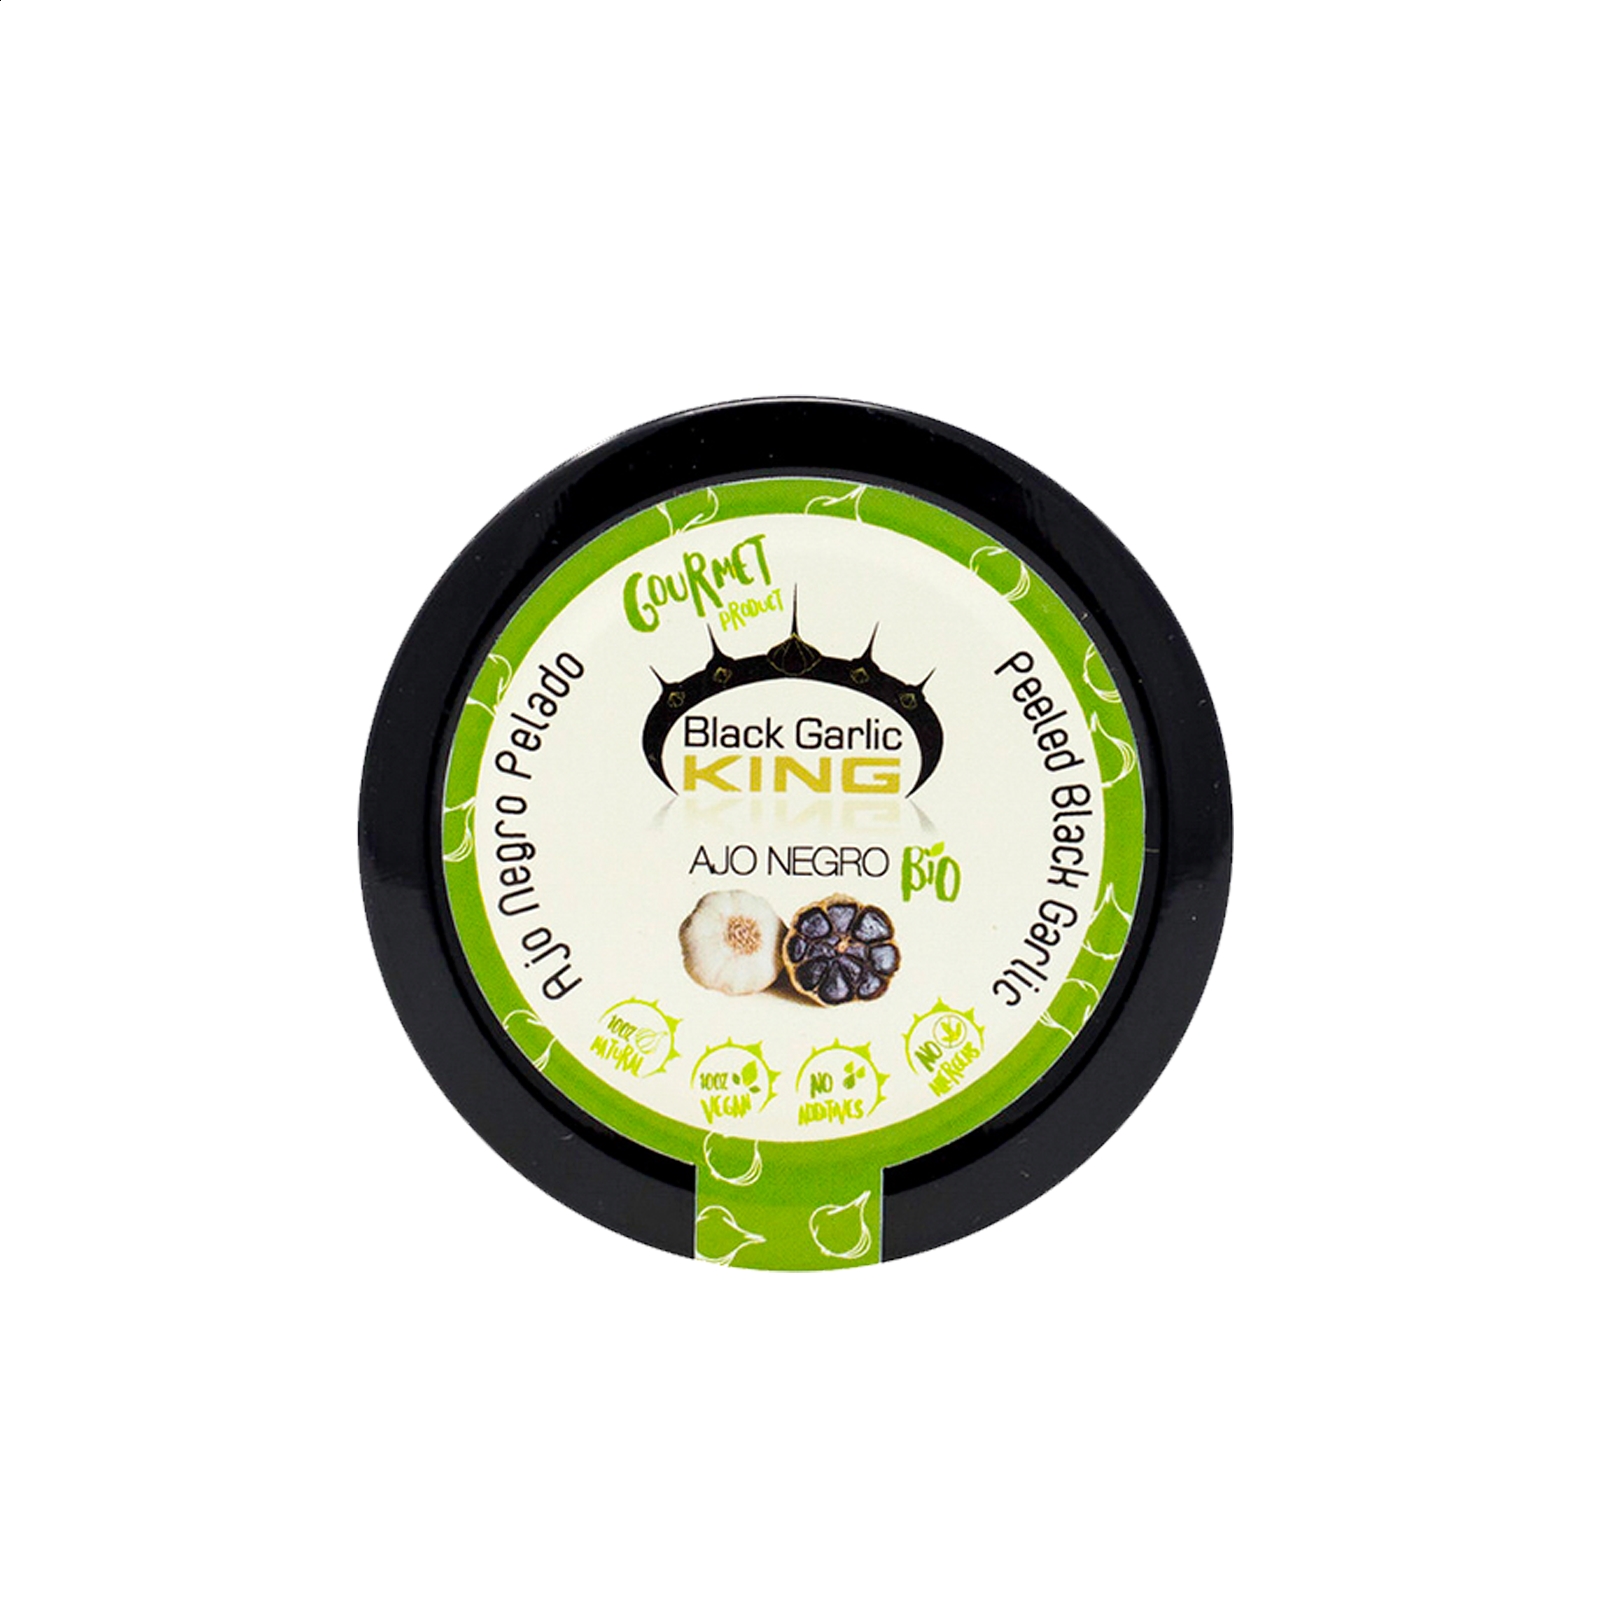 Black Garlic King - Dientes de ajo negro ecológico pelados gourmet 60g, 12uds